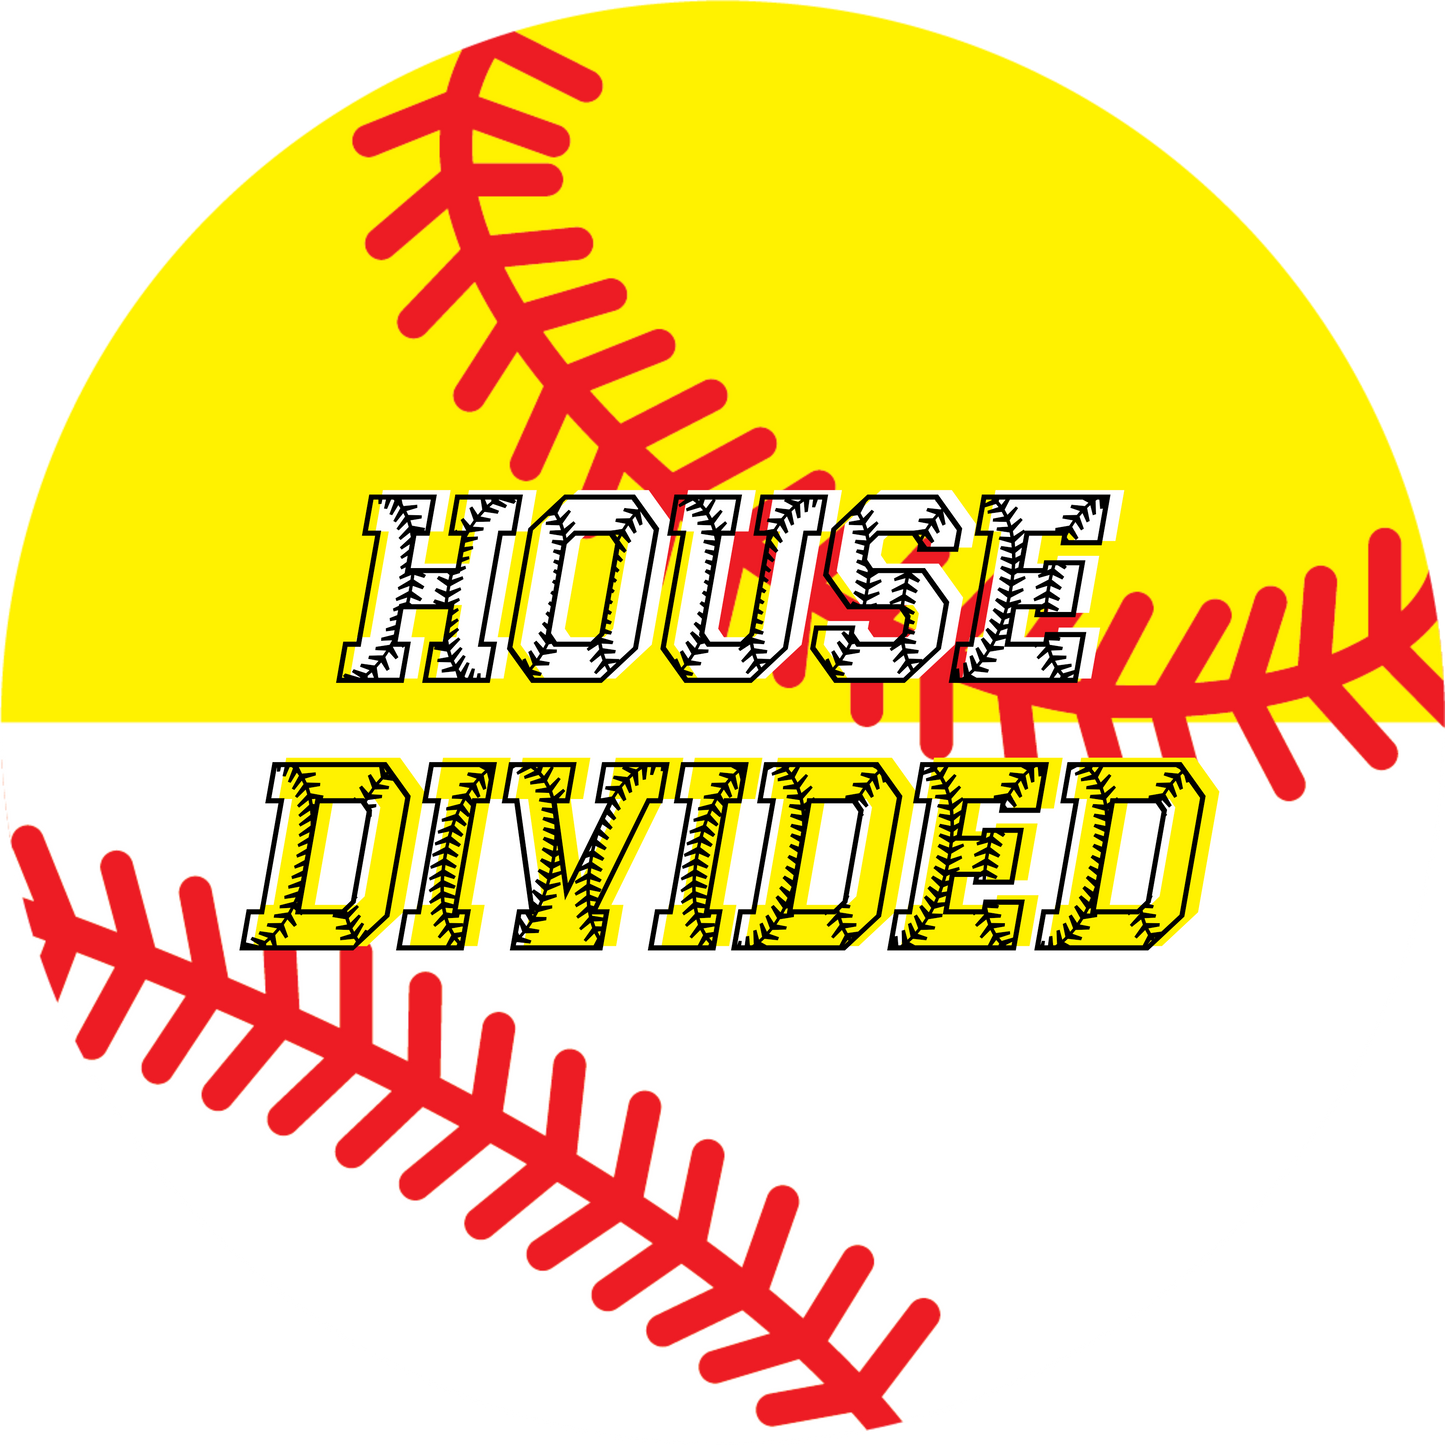 House Divided Baseball Softball Round